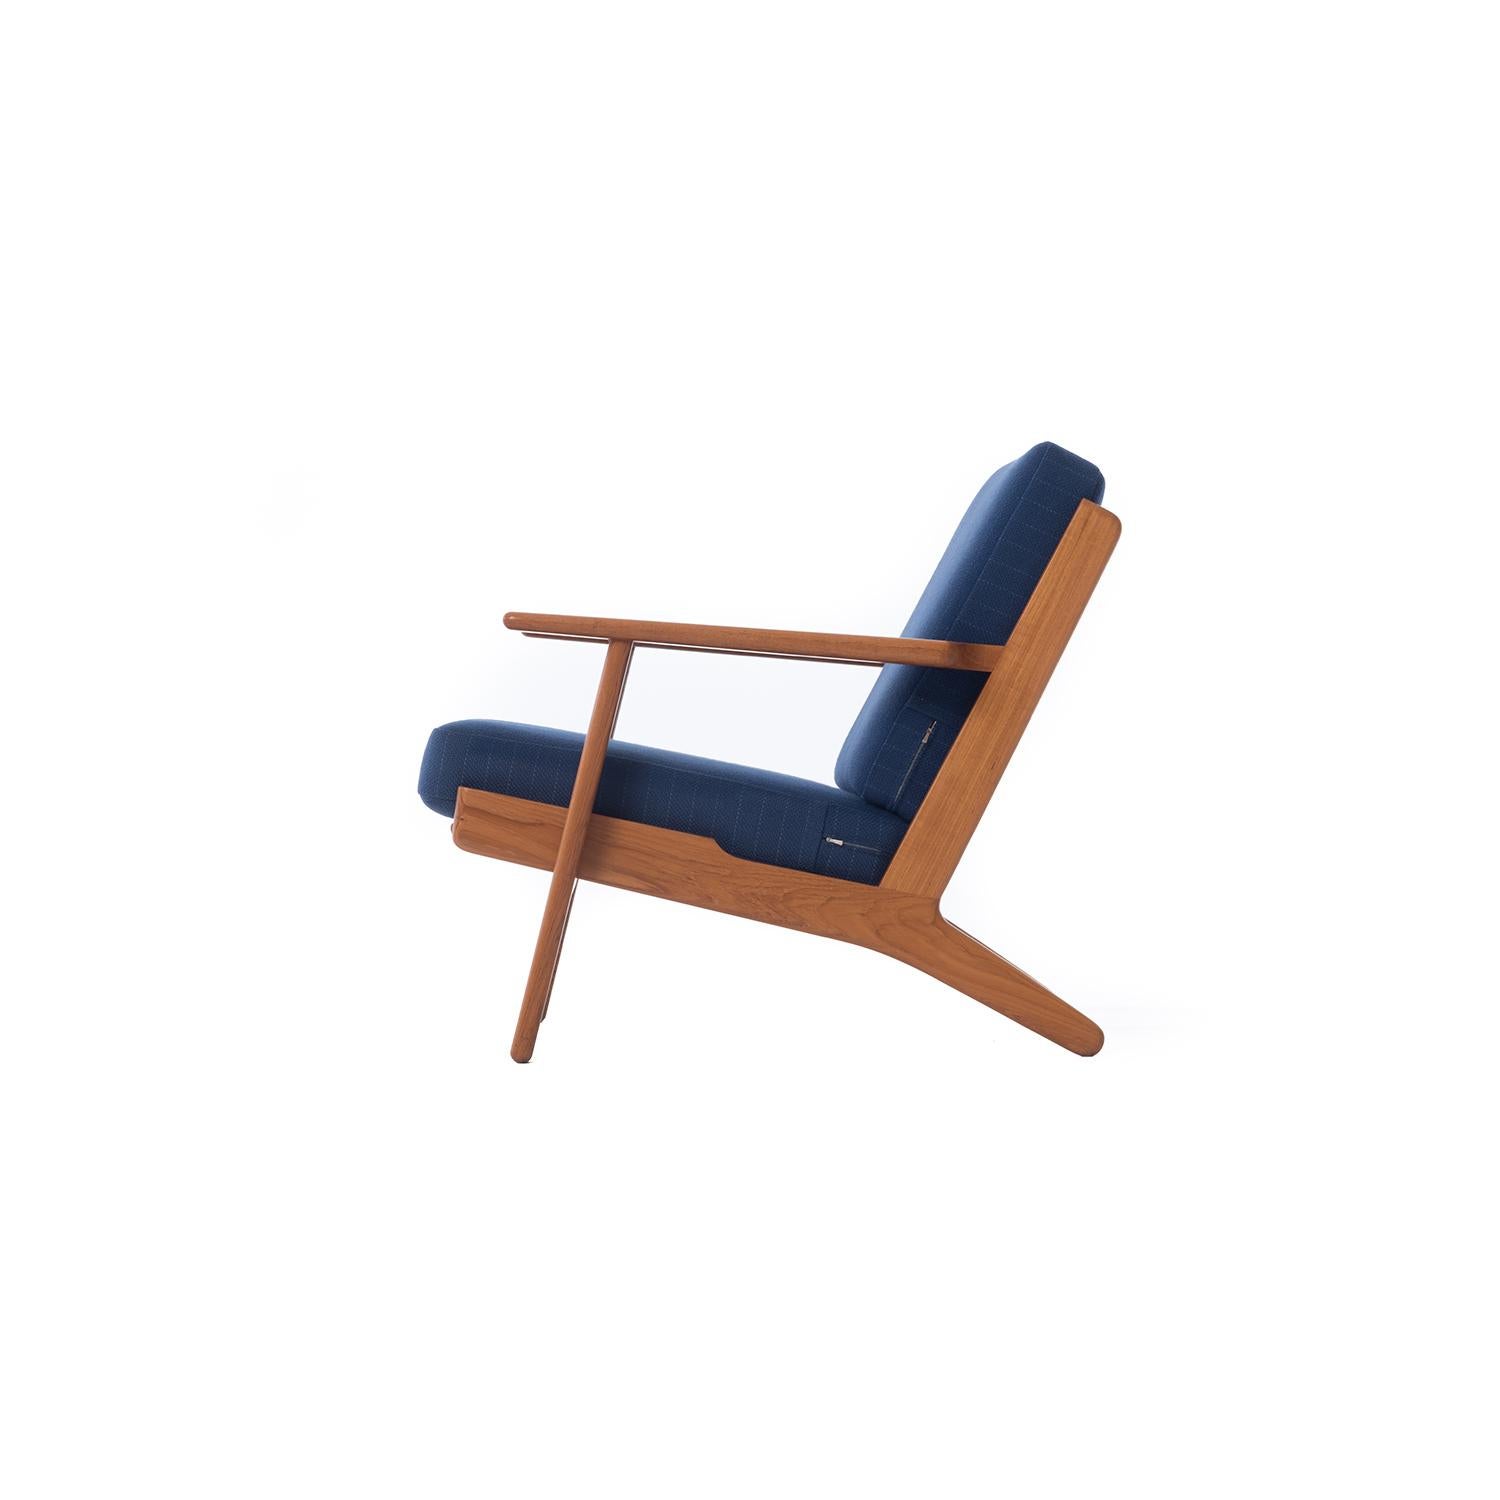 20th Century Danish Modern GE290 Teak Lounge Chairs by Hans J. Wegner GETAMA 290